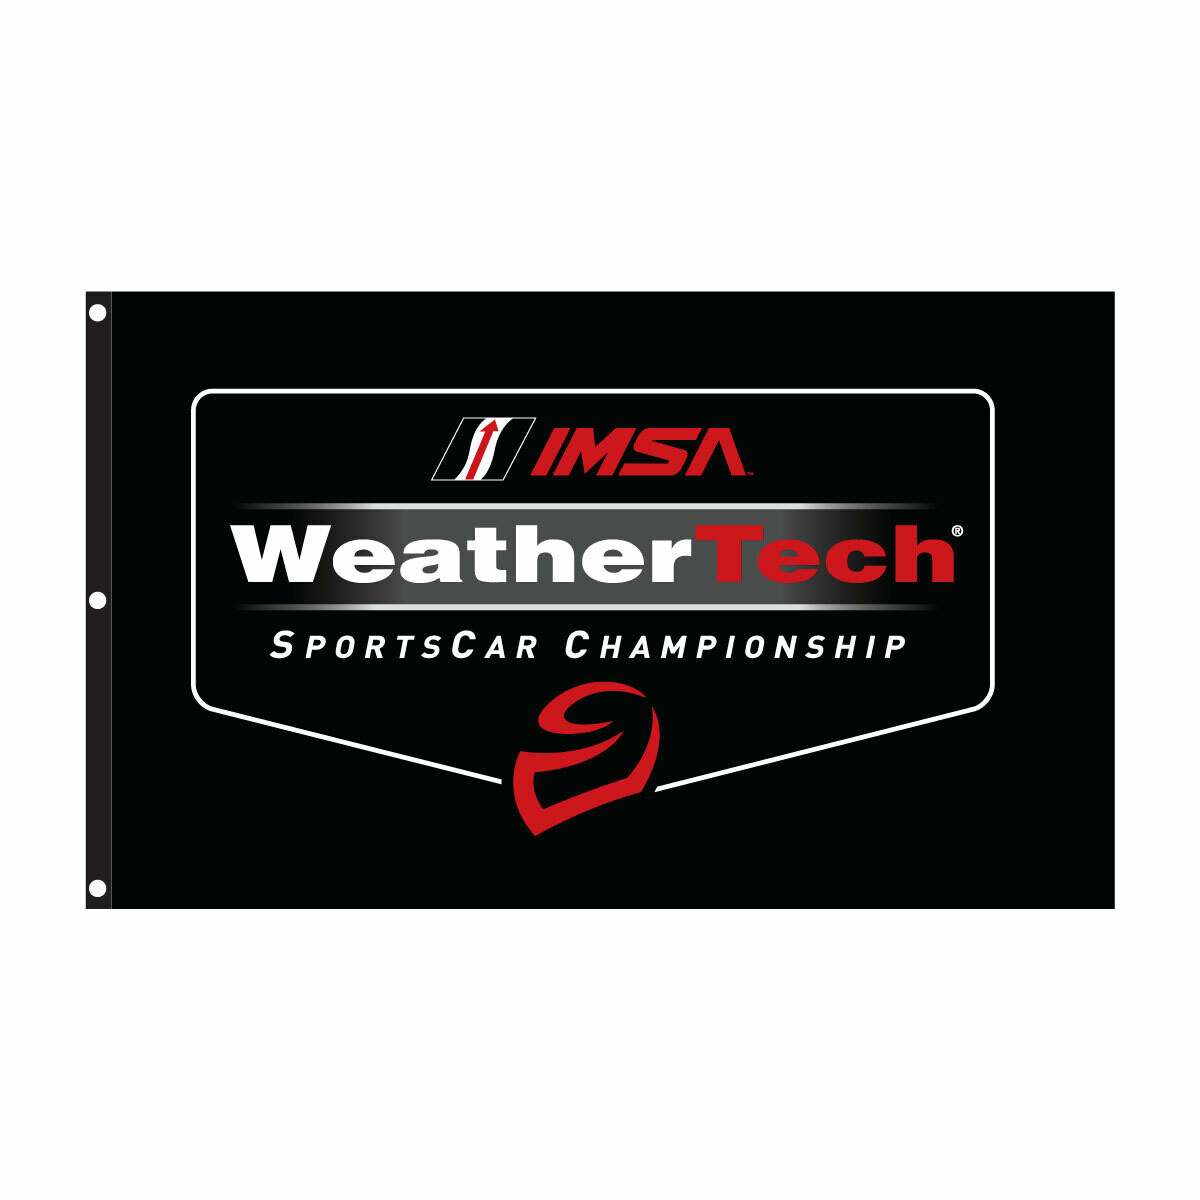 WeatherTech 3x5 Flag - Black